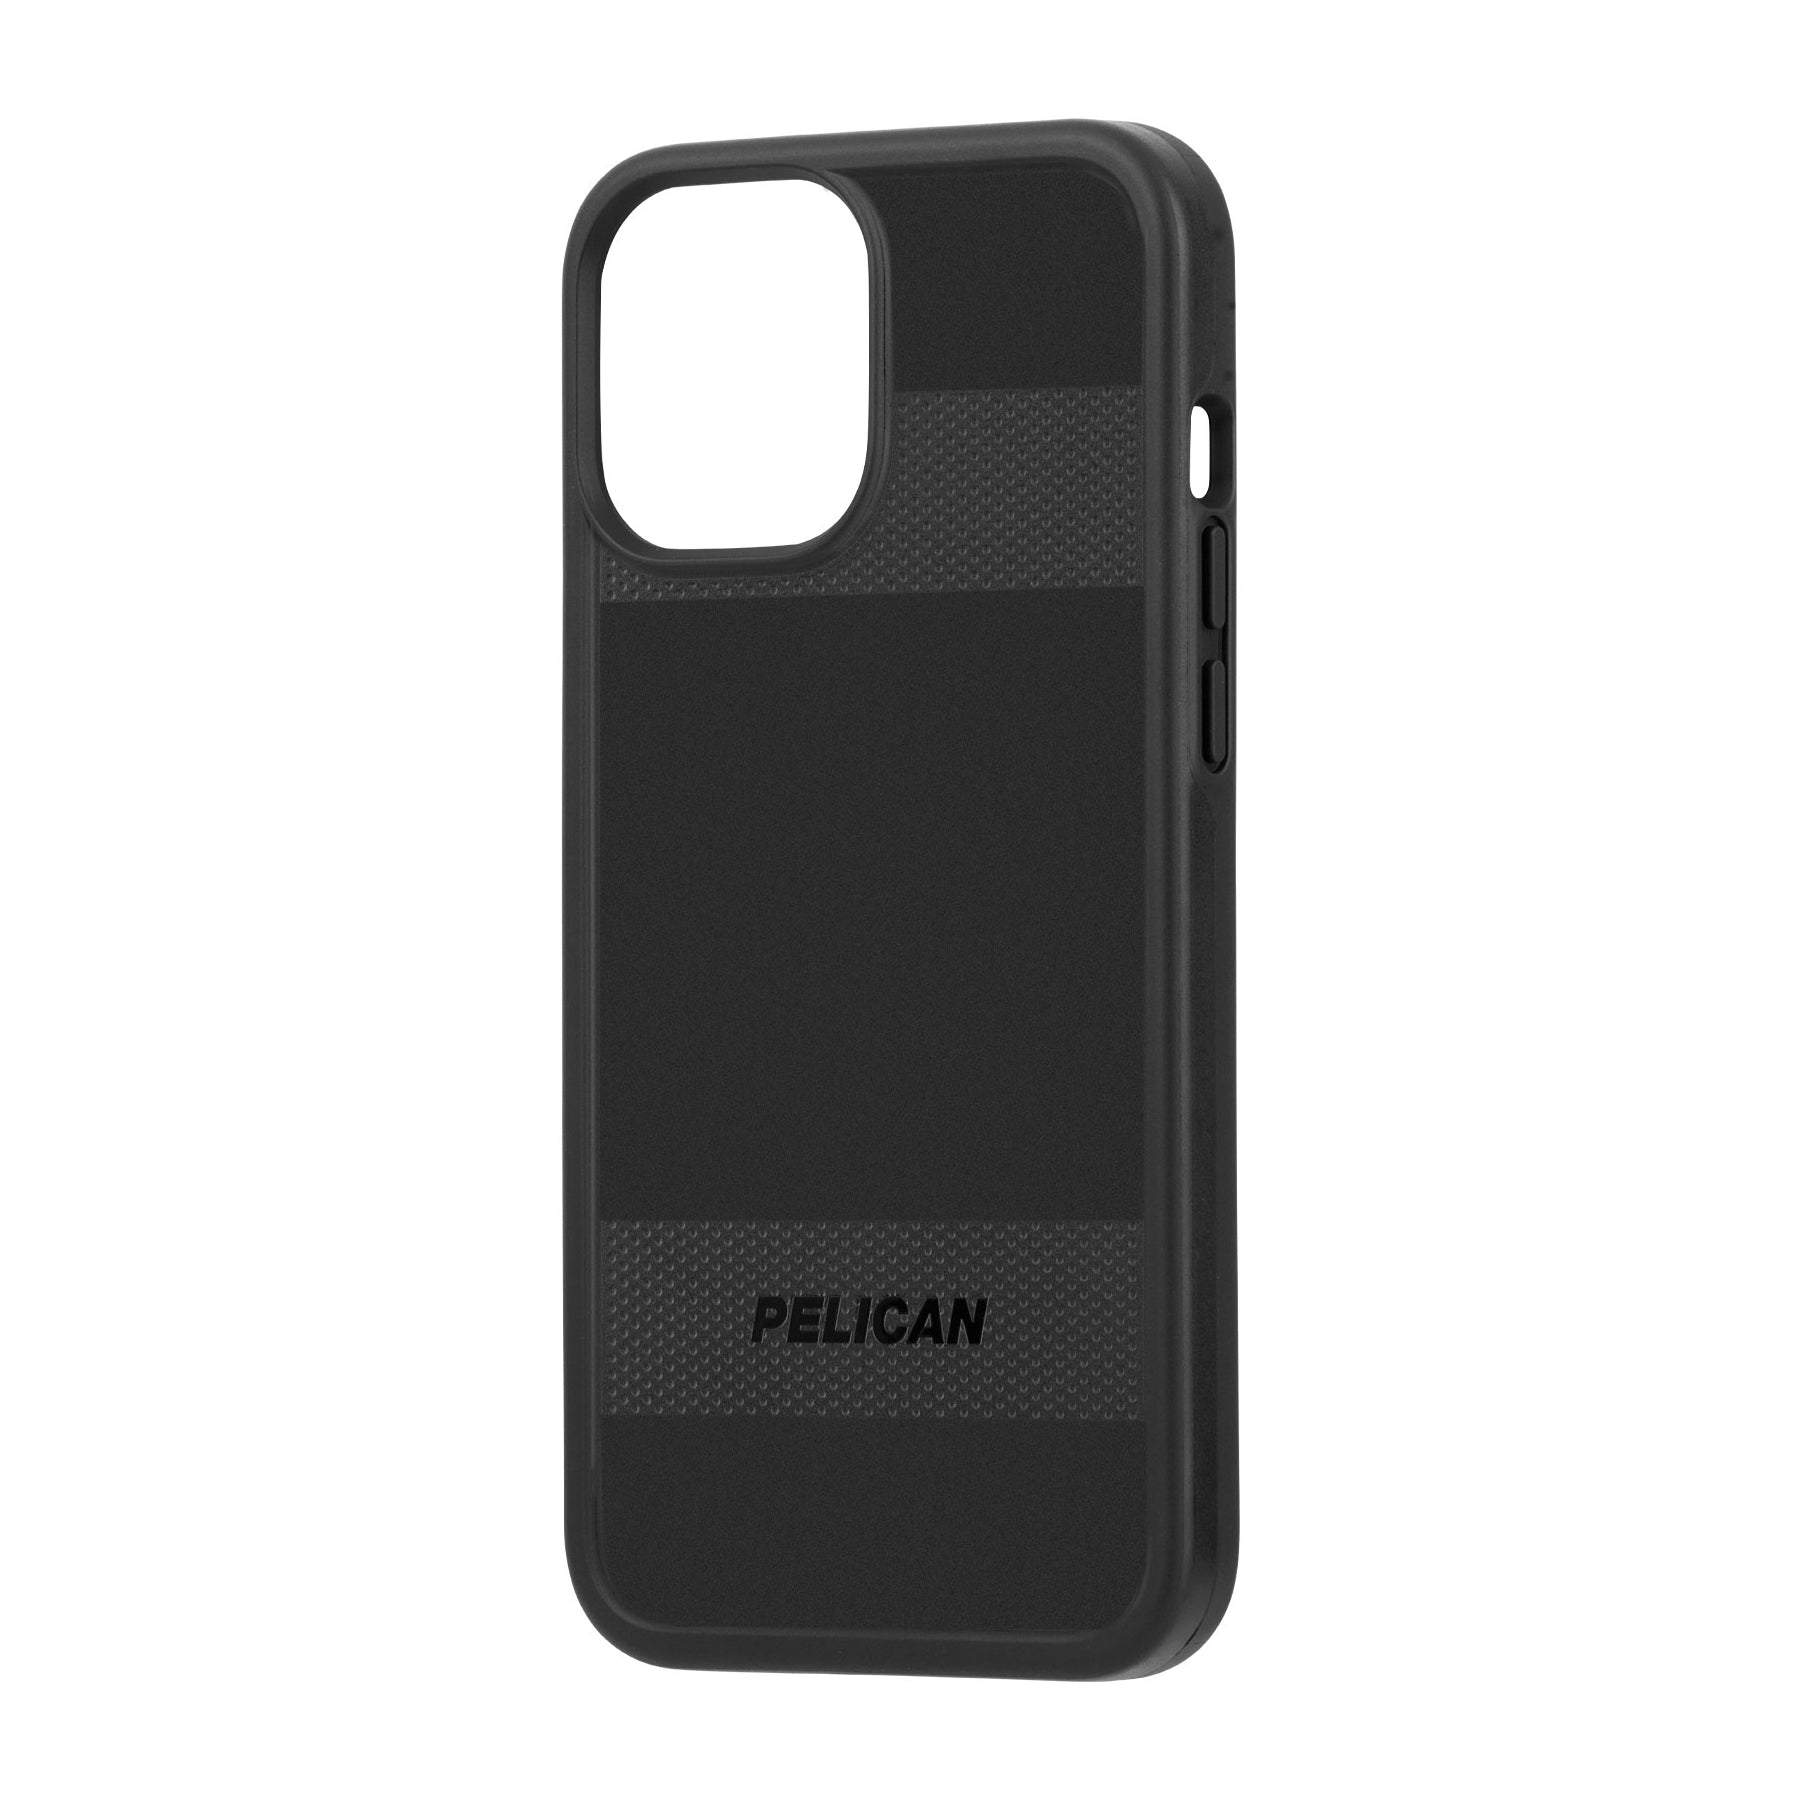 Pelican Protector Slim Rugged Case For iPhone iPhone 12 Pro Max - BLACK - Mac Addict